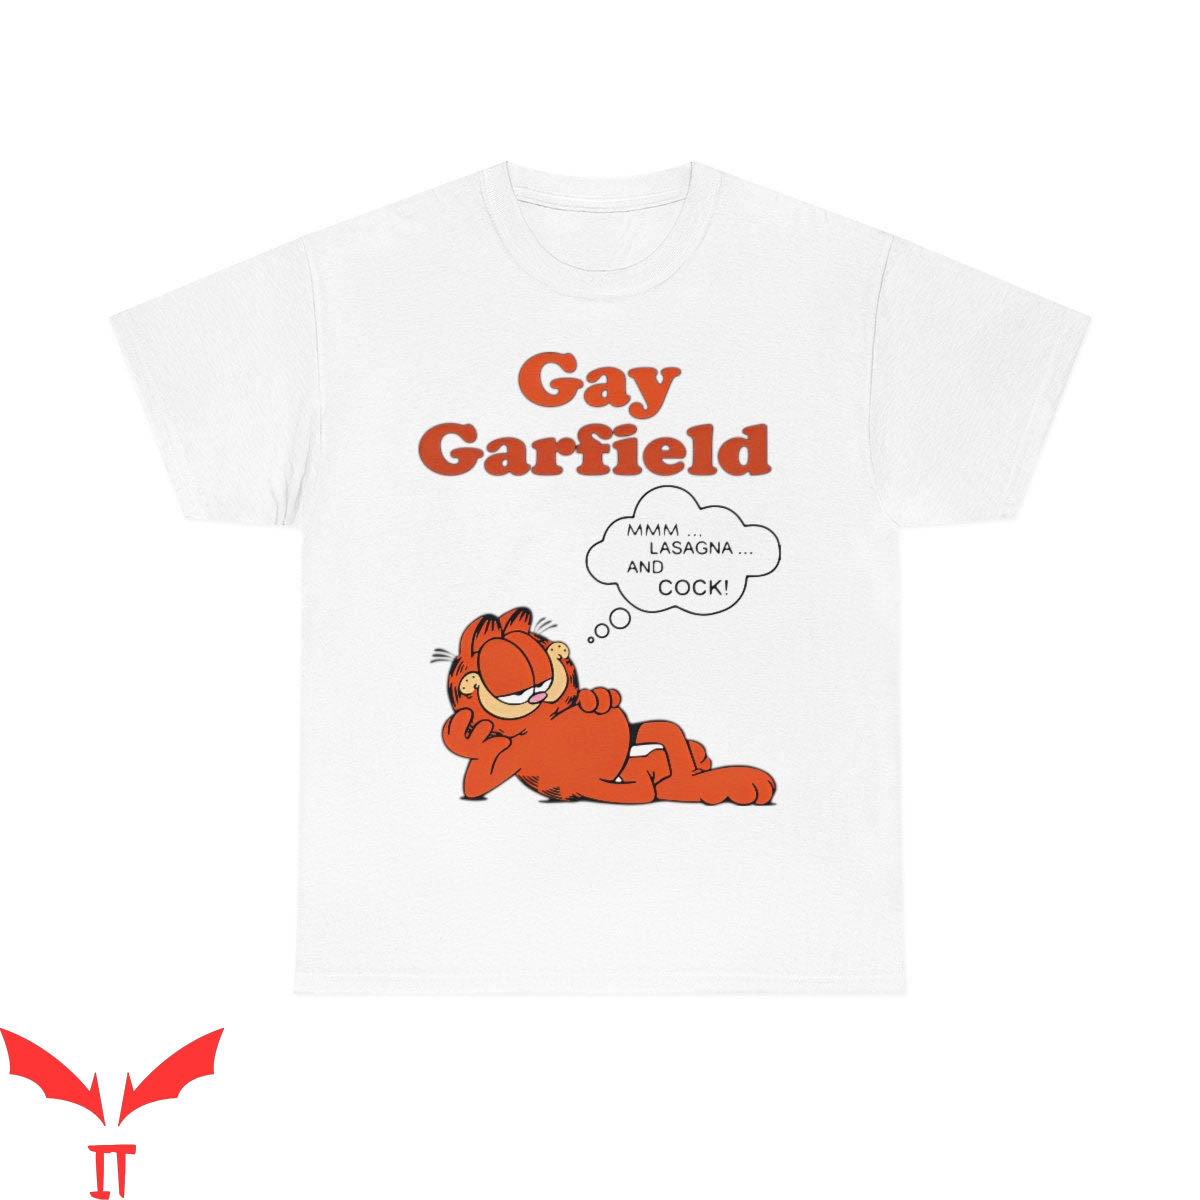 Gay Garfield T-Shirt